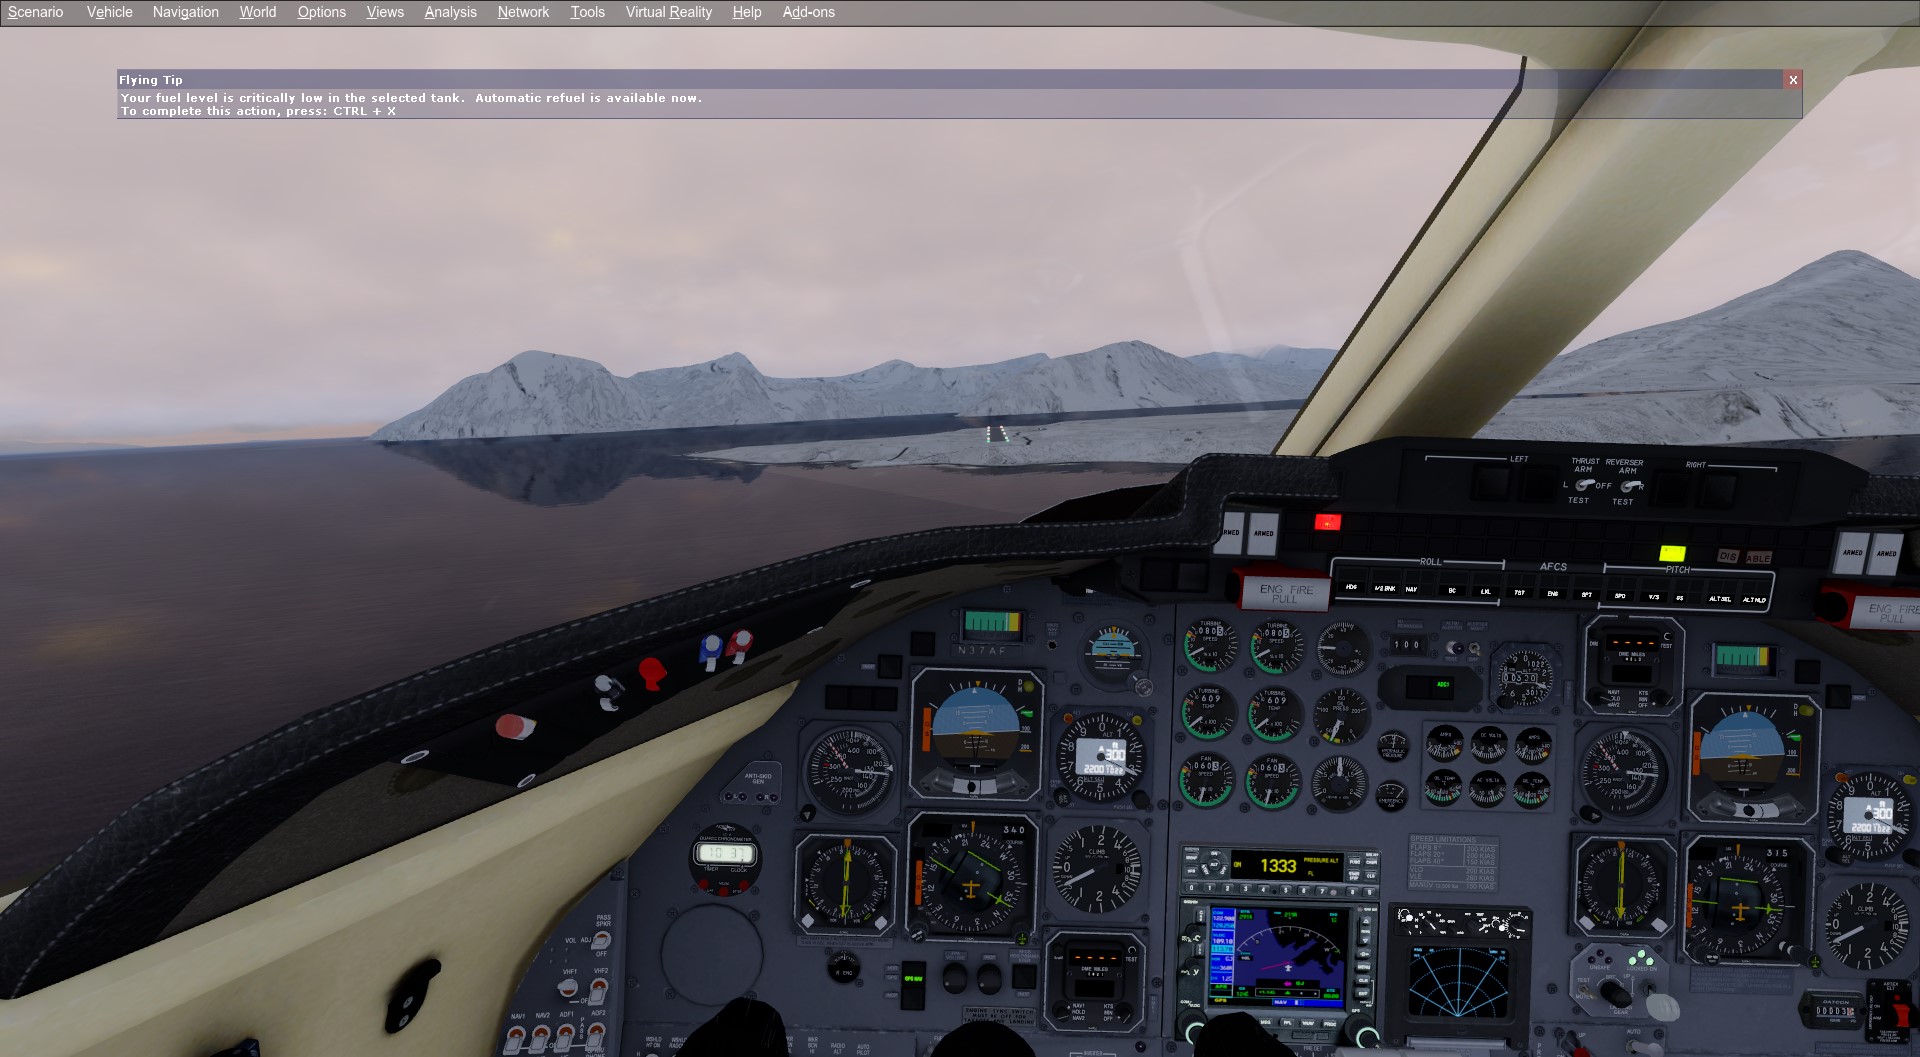 Flysimware – Learjet 35A 评测与冰岛送货之旅-6273 